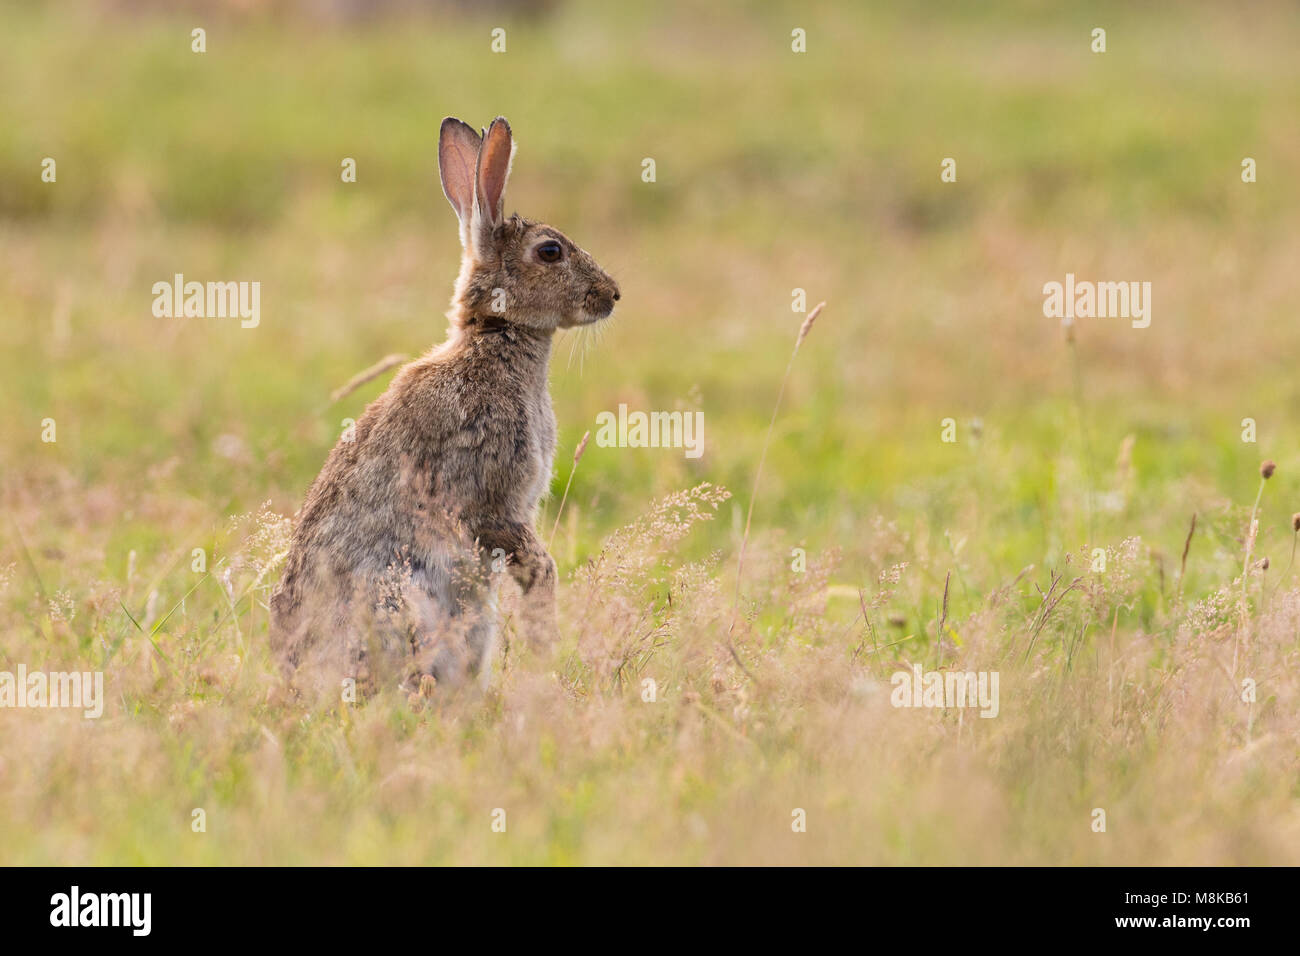 Rabbit stood up in the grass listening for predators Stock Photo